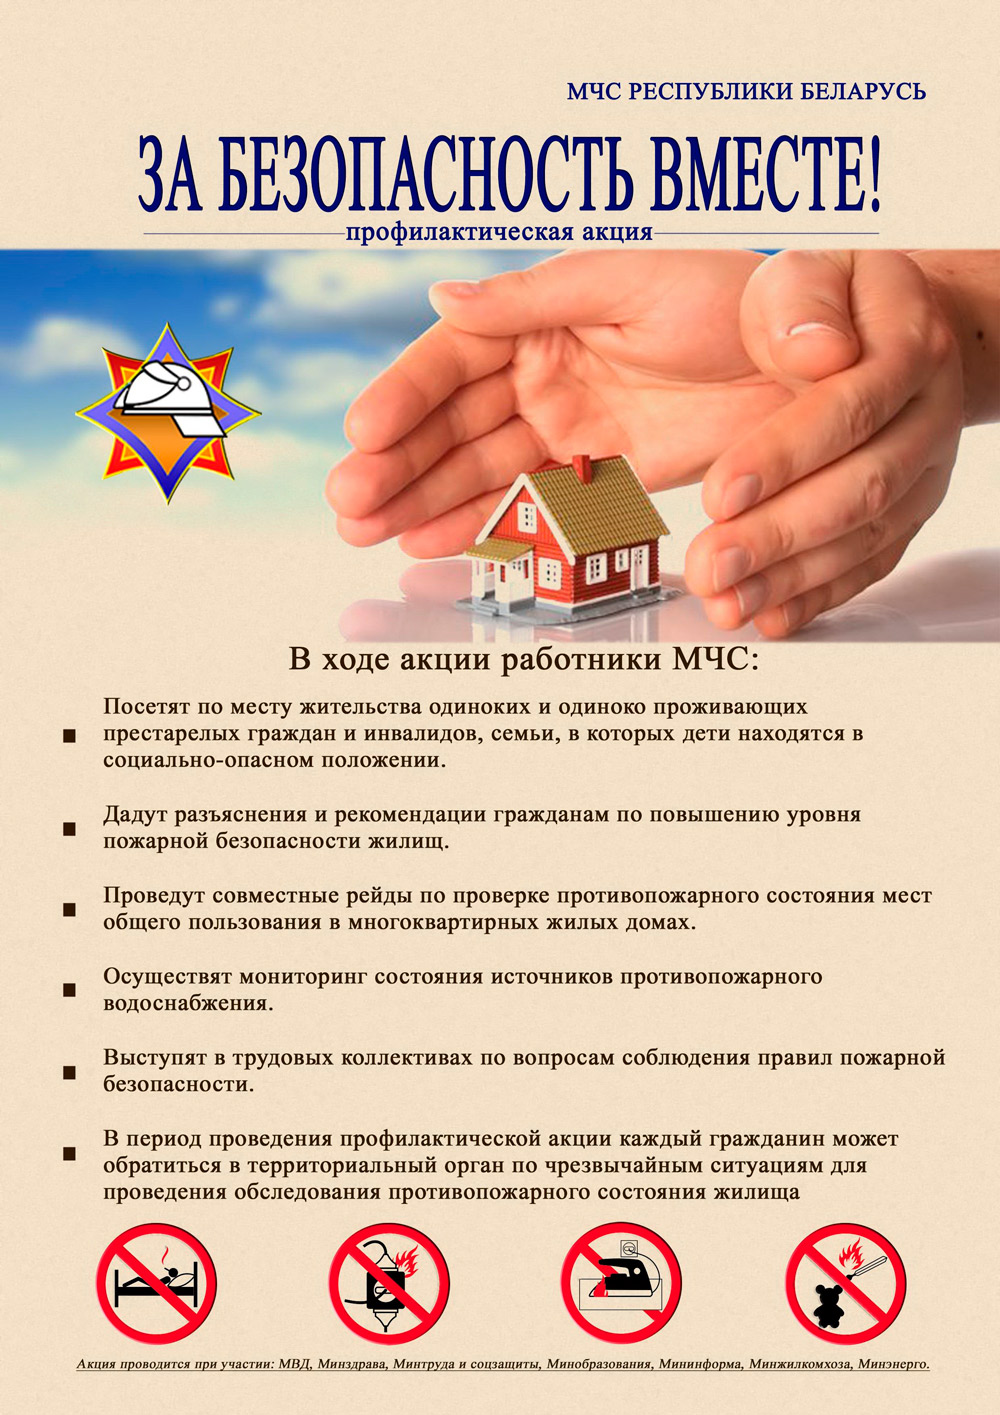 Акция МЧС «За безопасность вместе» стартовала в Беларуси